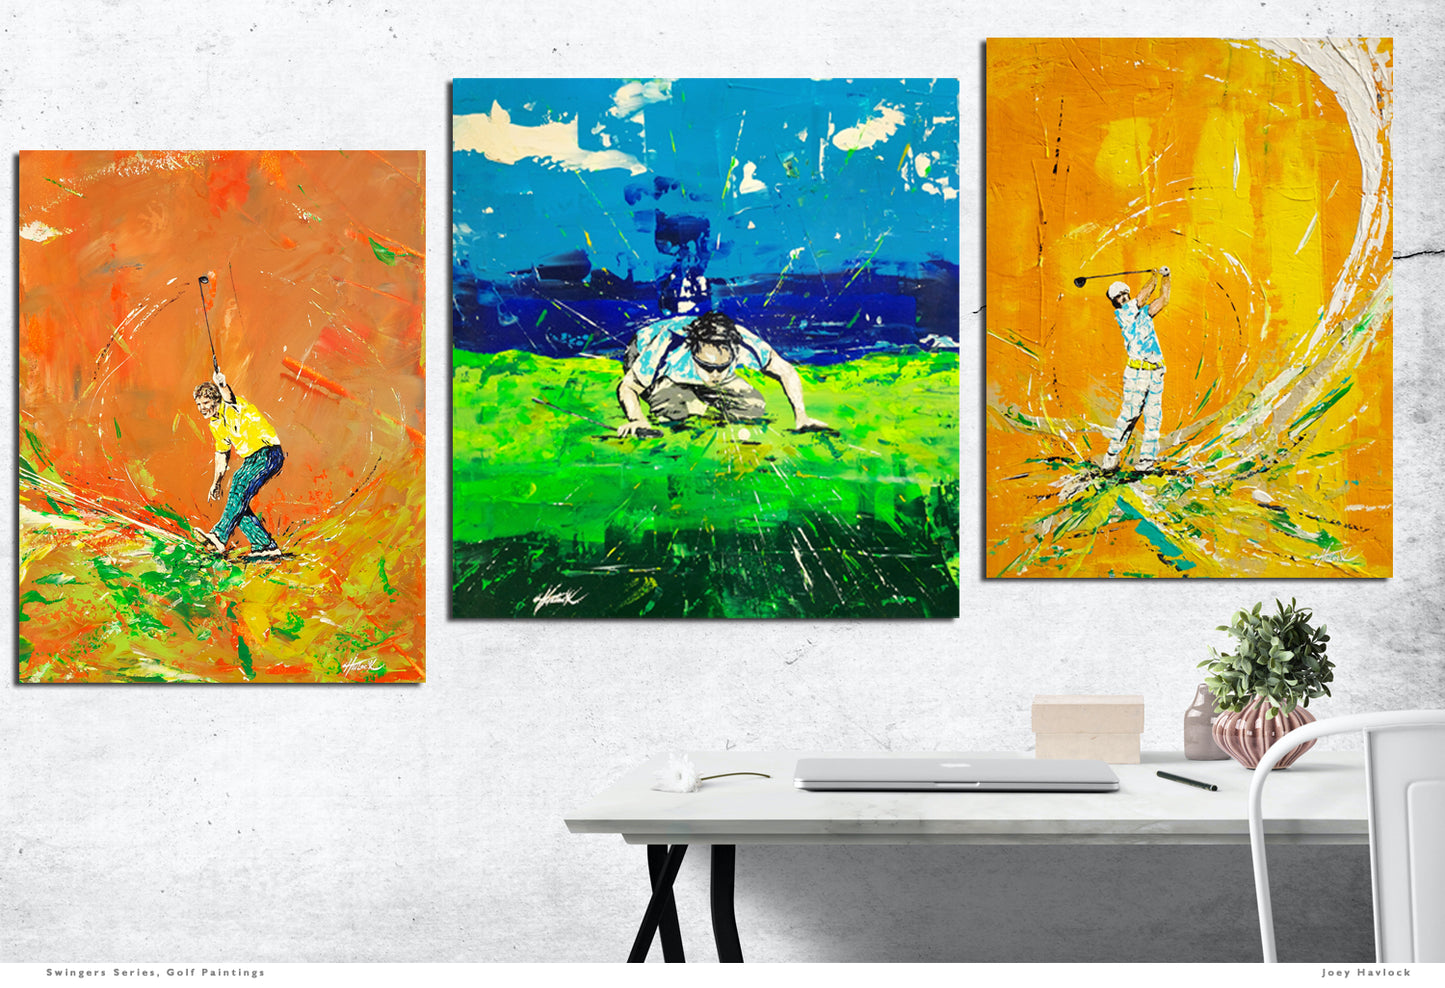 MAKE A WISH - Original Painting - SWINGERS - Impressionist Golf Series by Joey Havlock